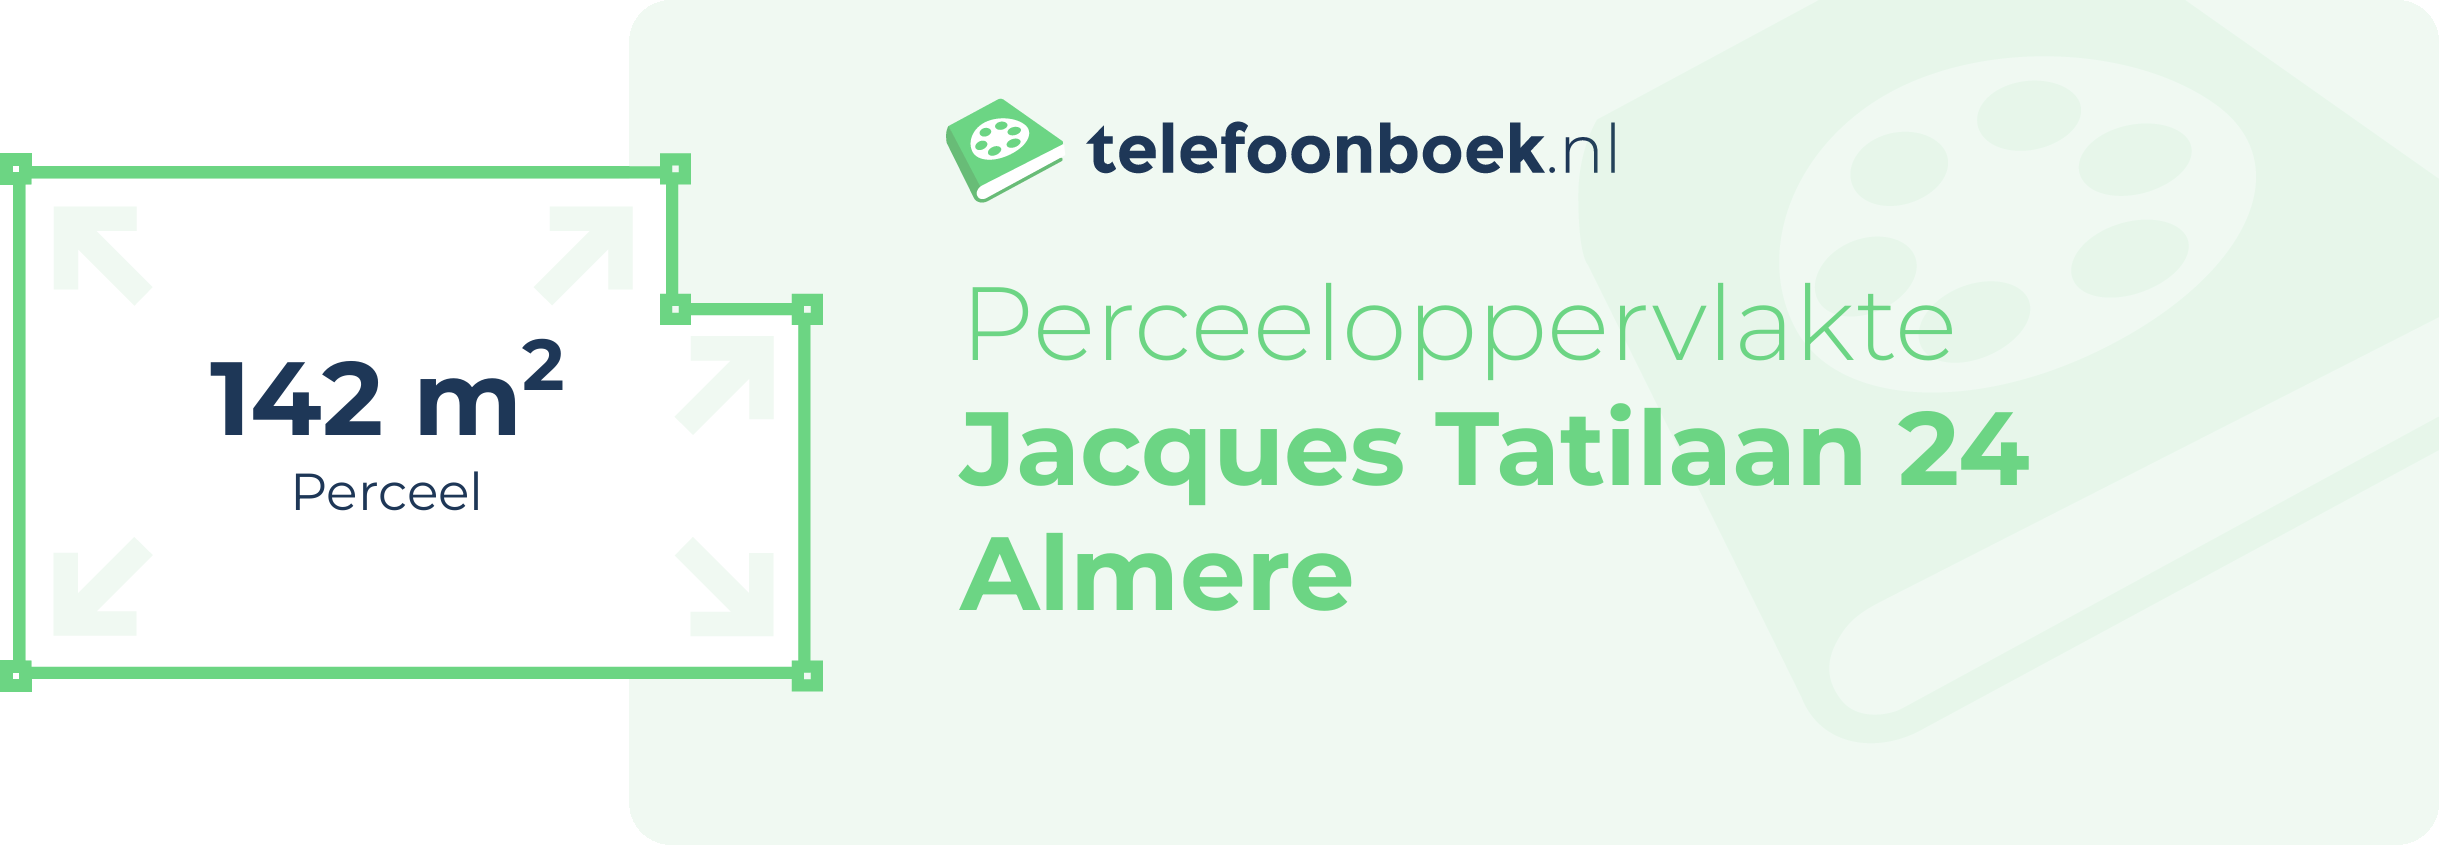 Perceeloppervlakte Jacques Tatilaan 24 Almere